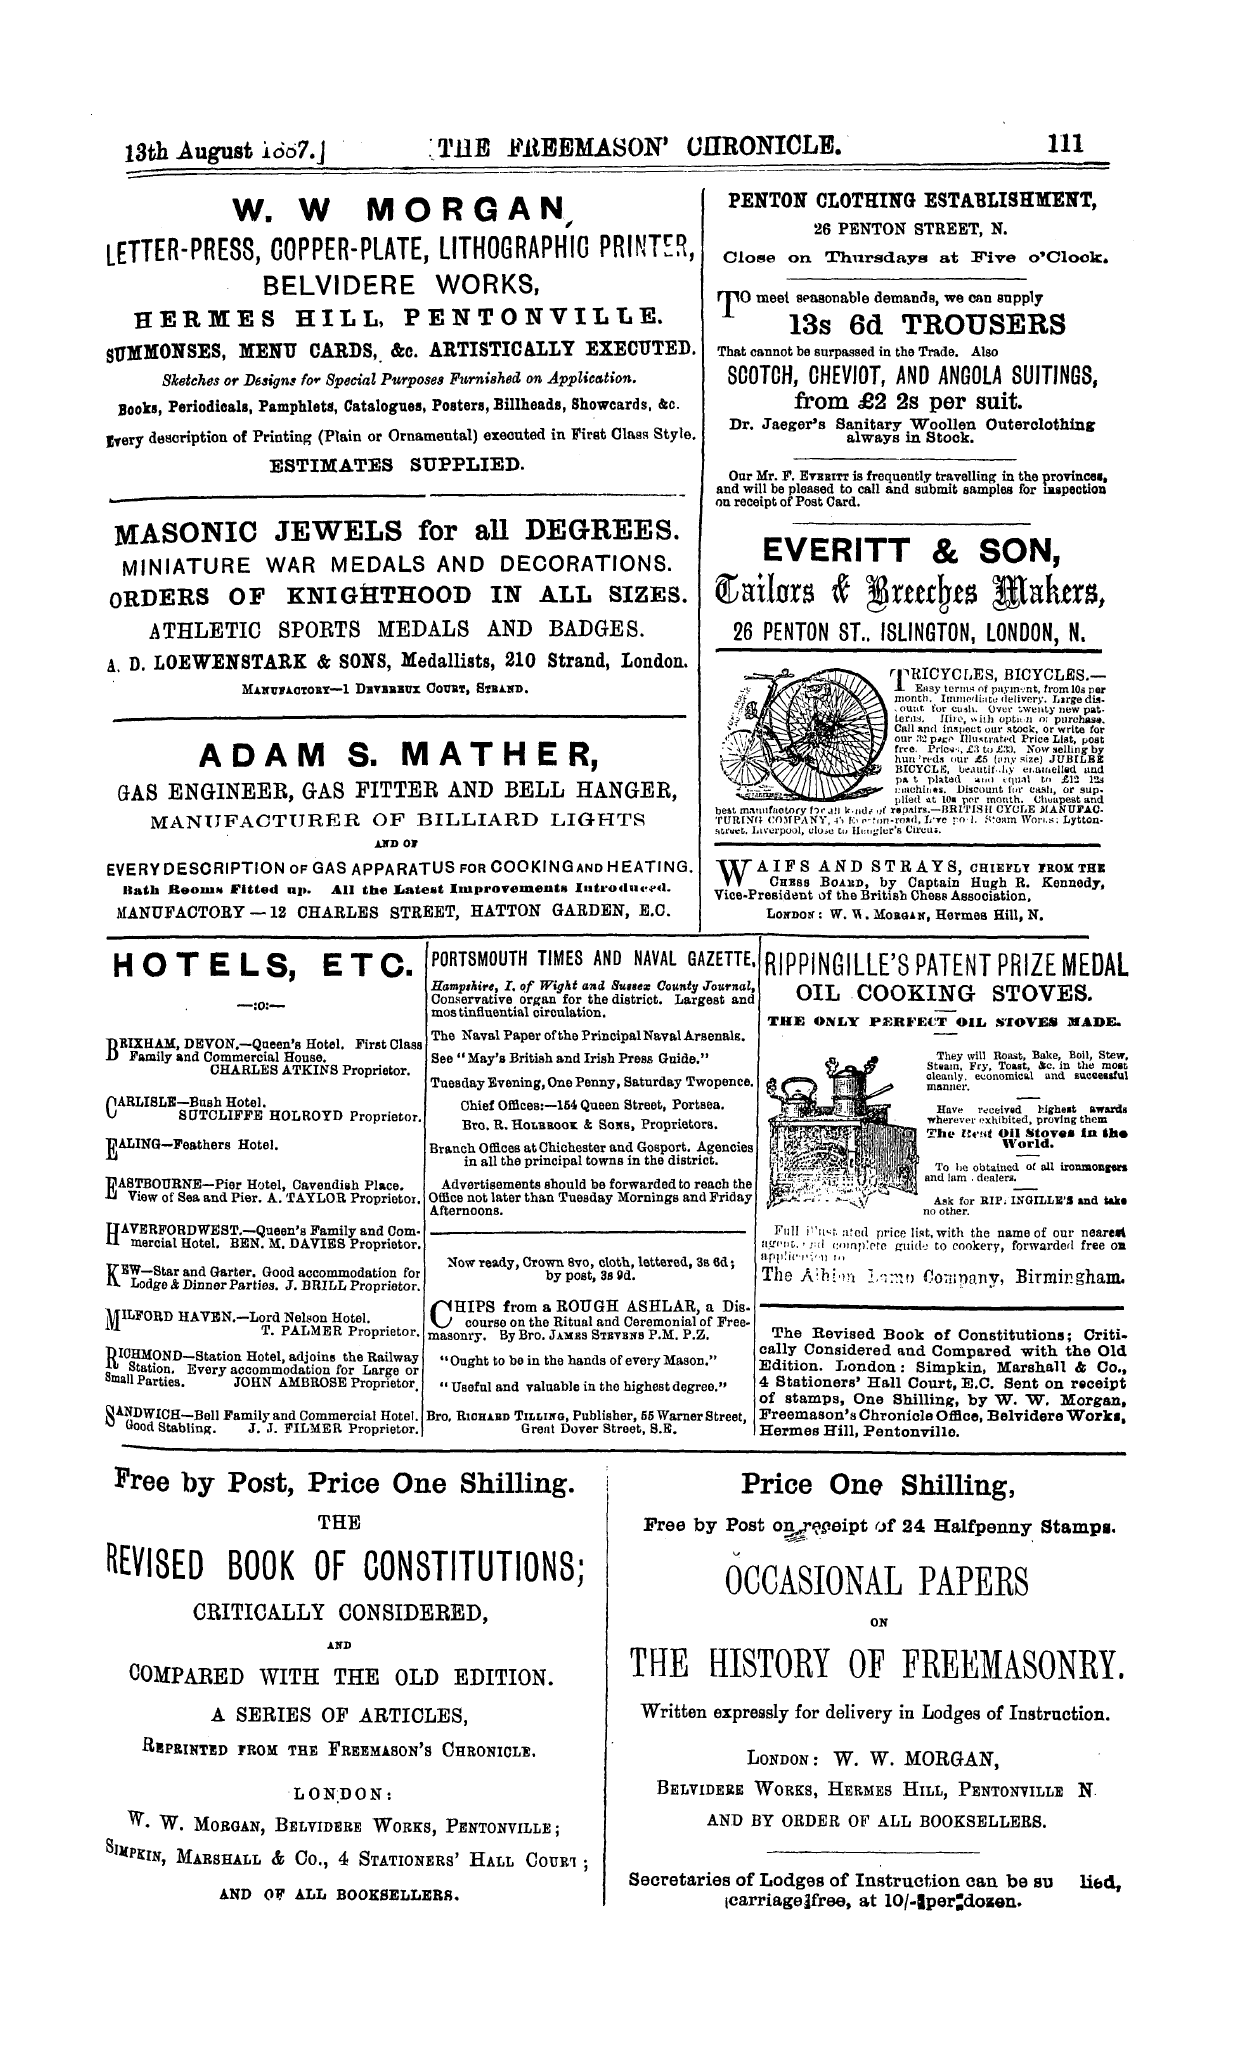 The Freemason's Chronicle: 1887-08-13 - Ad01509